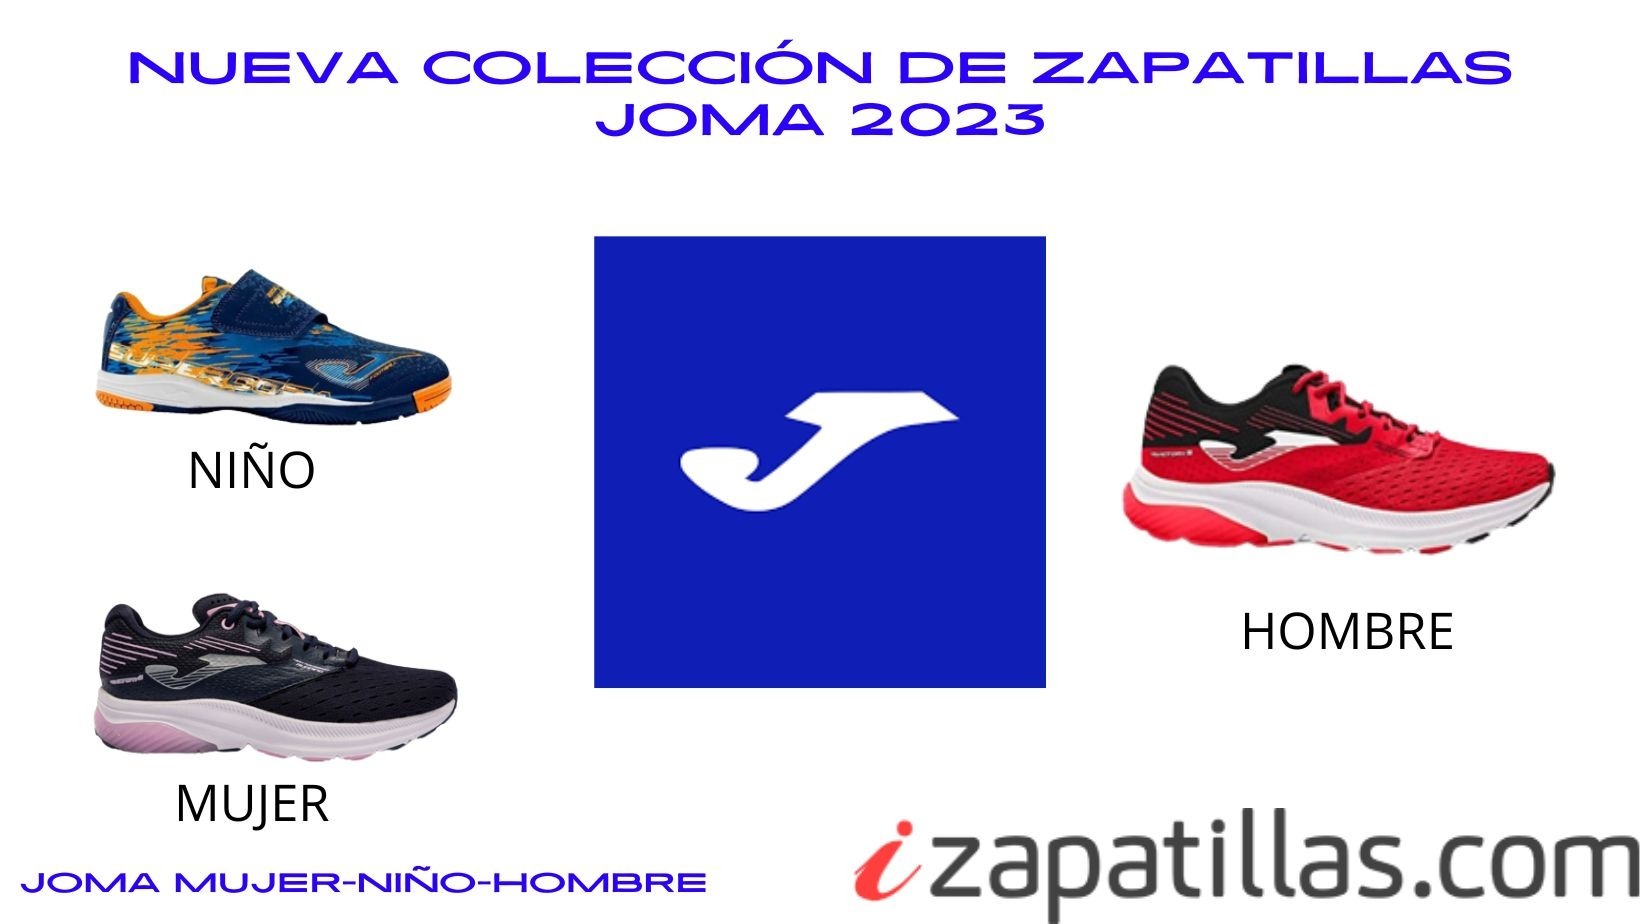 Zapatillas Joma Contrareembolso Baratas // Comprar Zapatillas Joma Baratas // Zapatillas Contrareembolso Online.